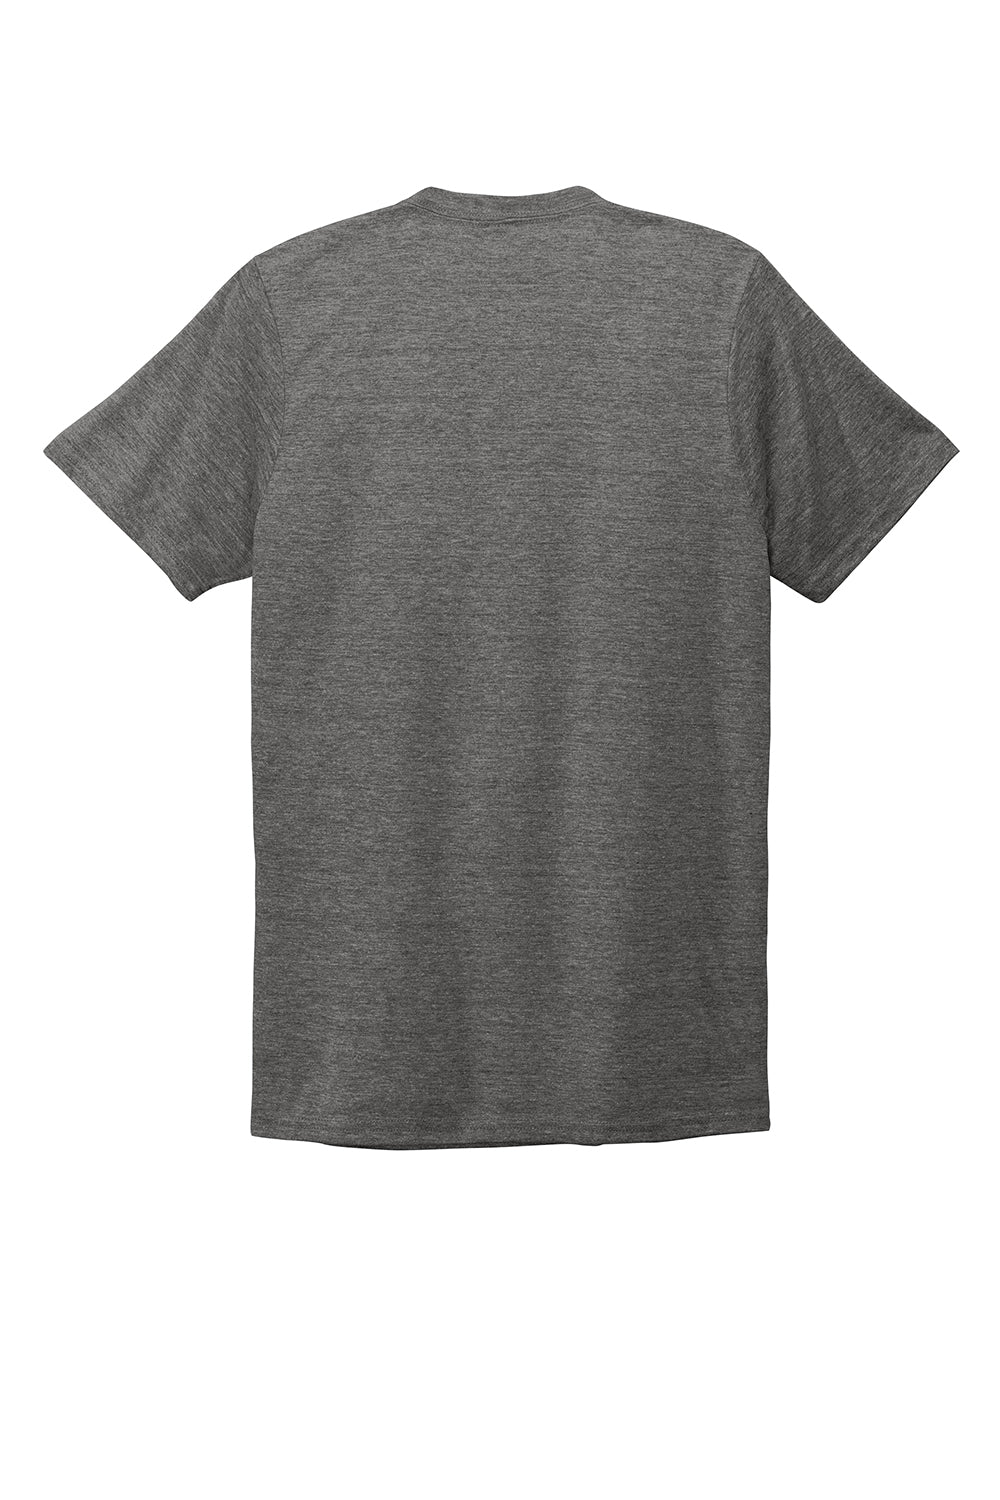 Allmade AL2014 Mens Short Sleeve V-Neck T-Shirt Space Black Flat Back